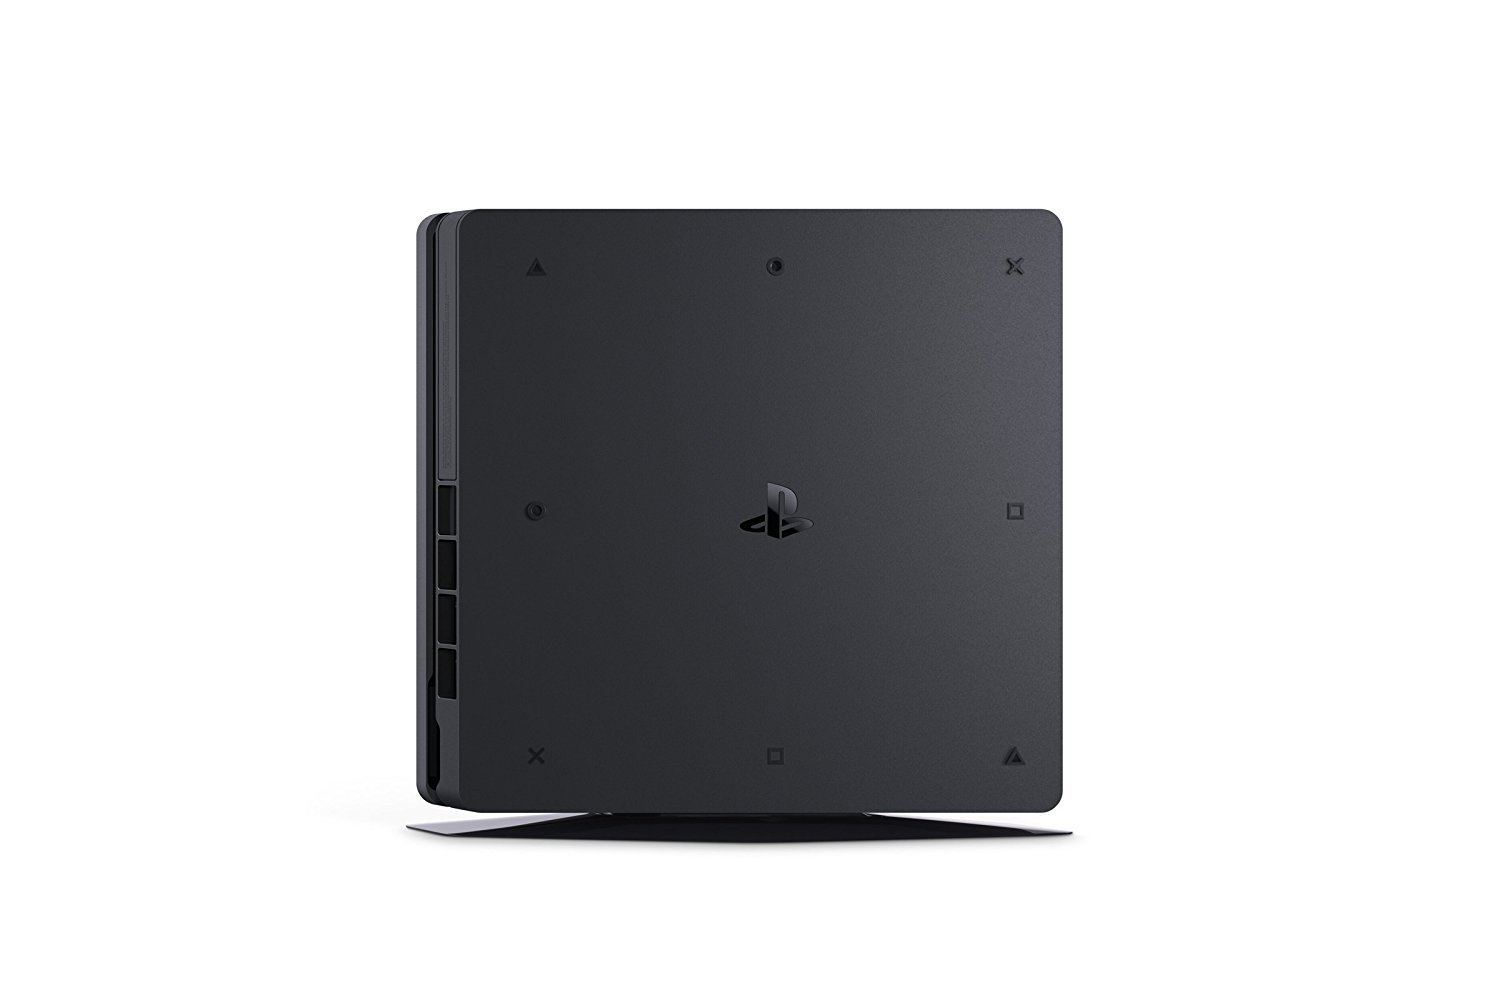 PlayStation 4 CUH-2200 Series 500GB HDD (Jet Black)